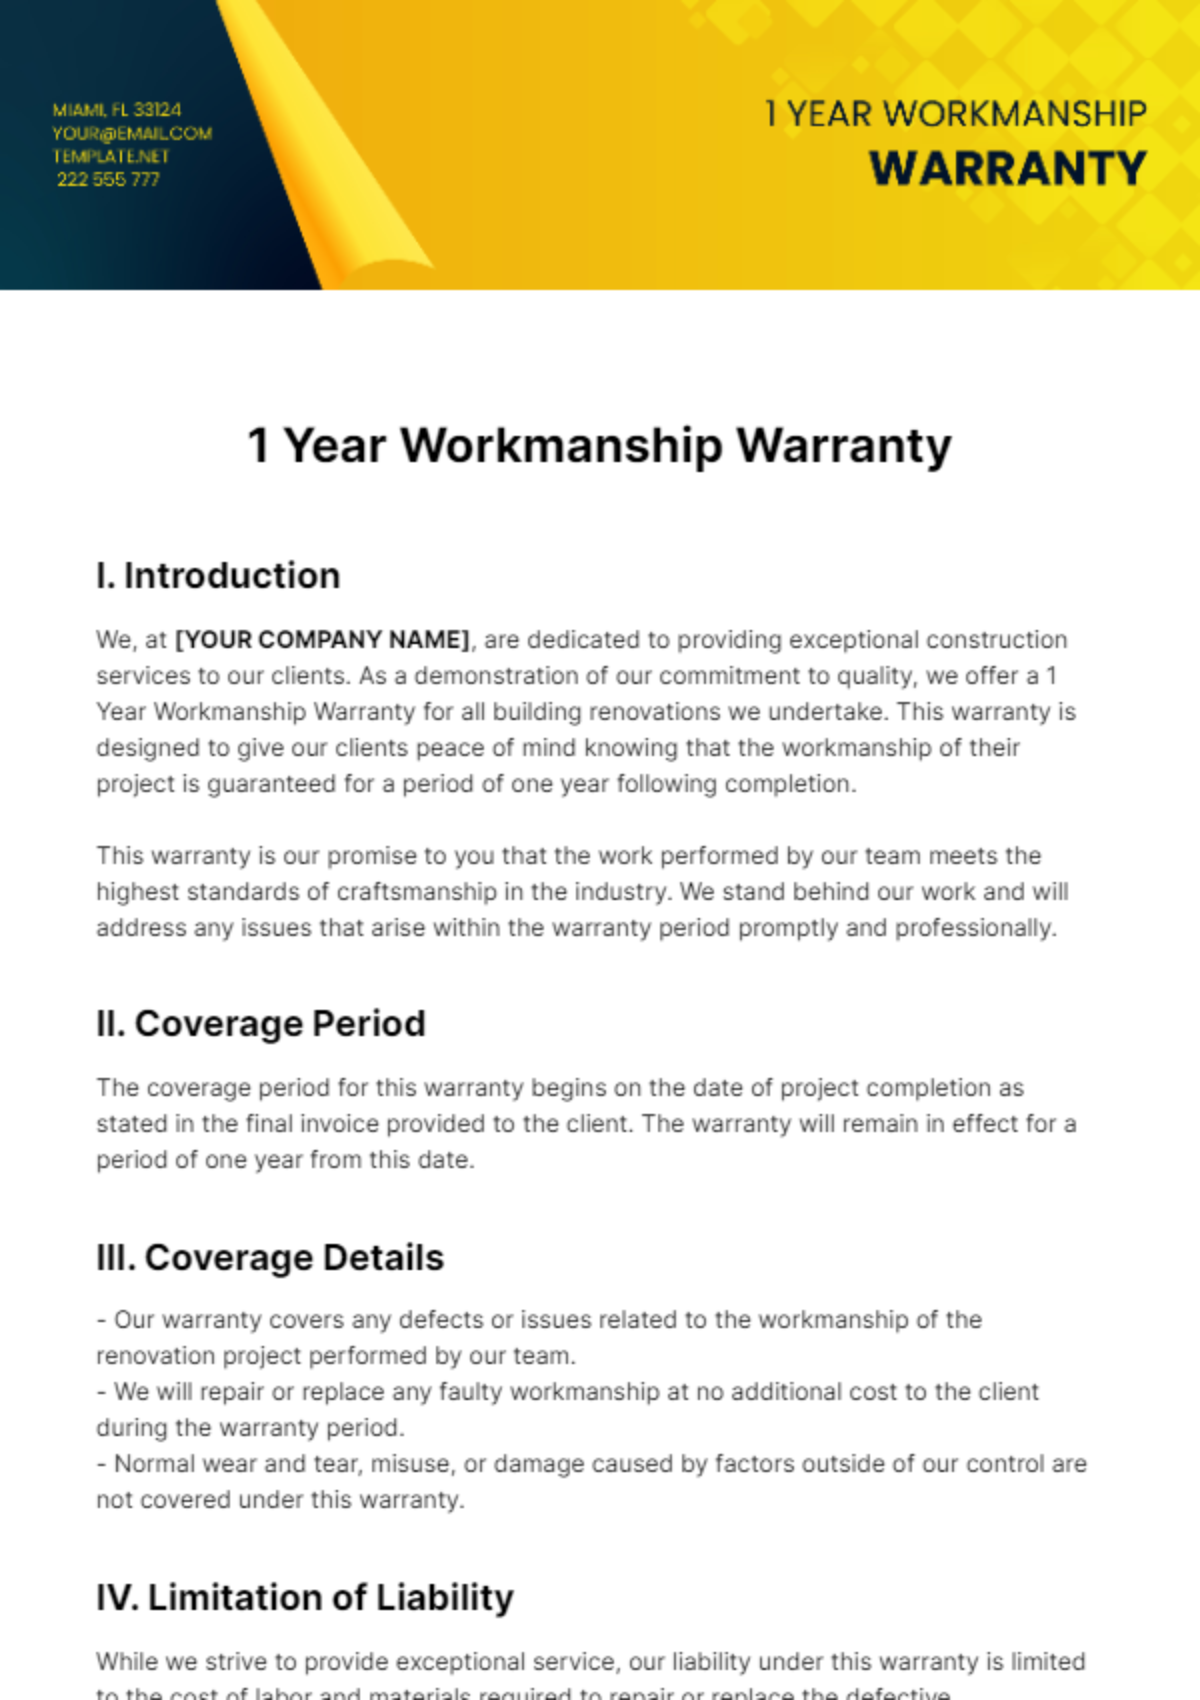 1 Year Workmanship Warranty Template